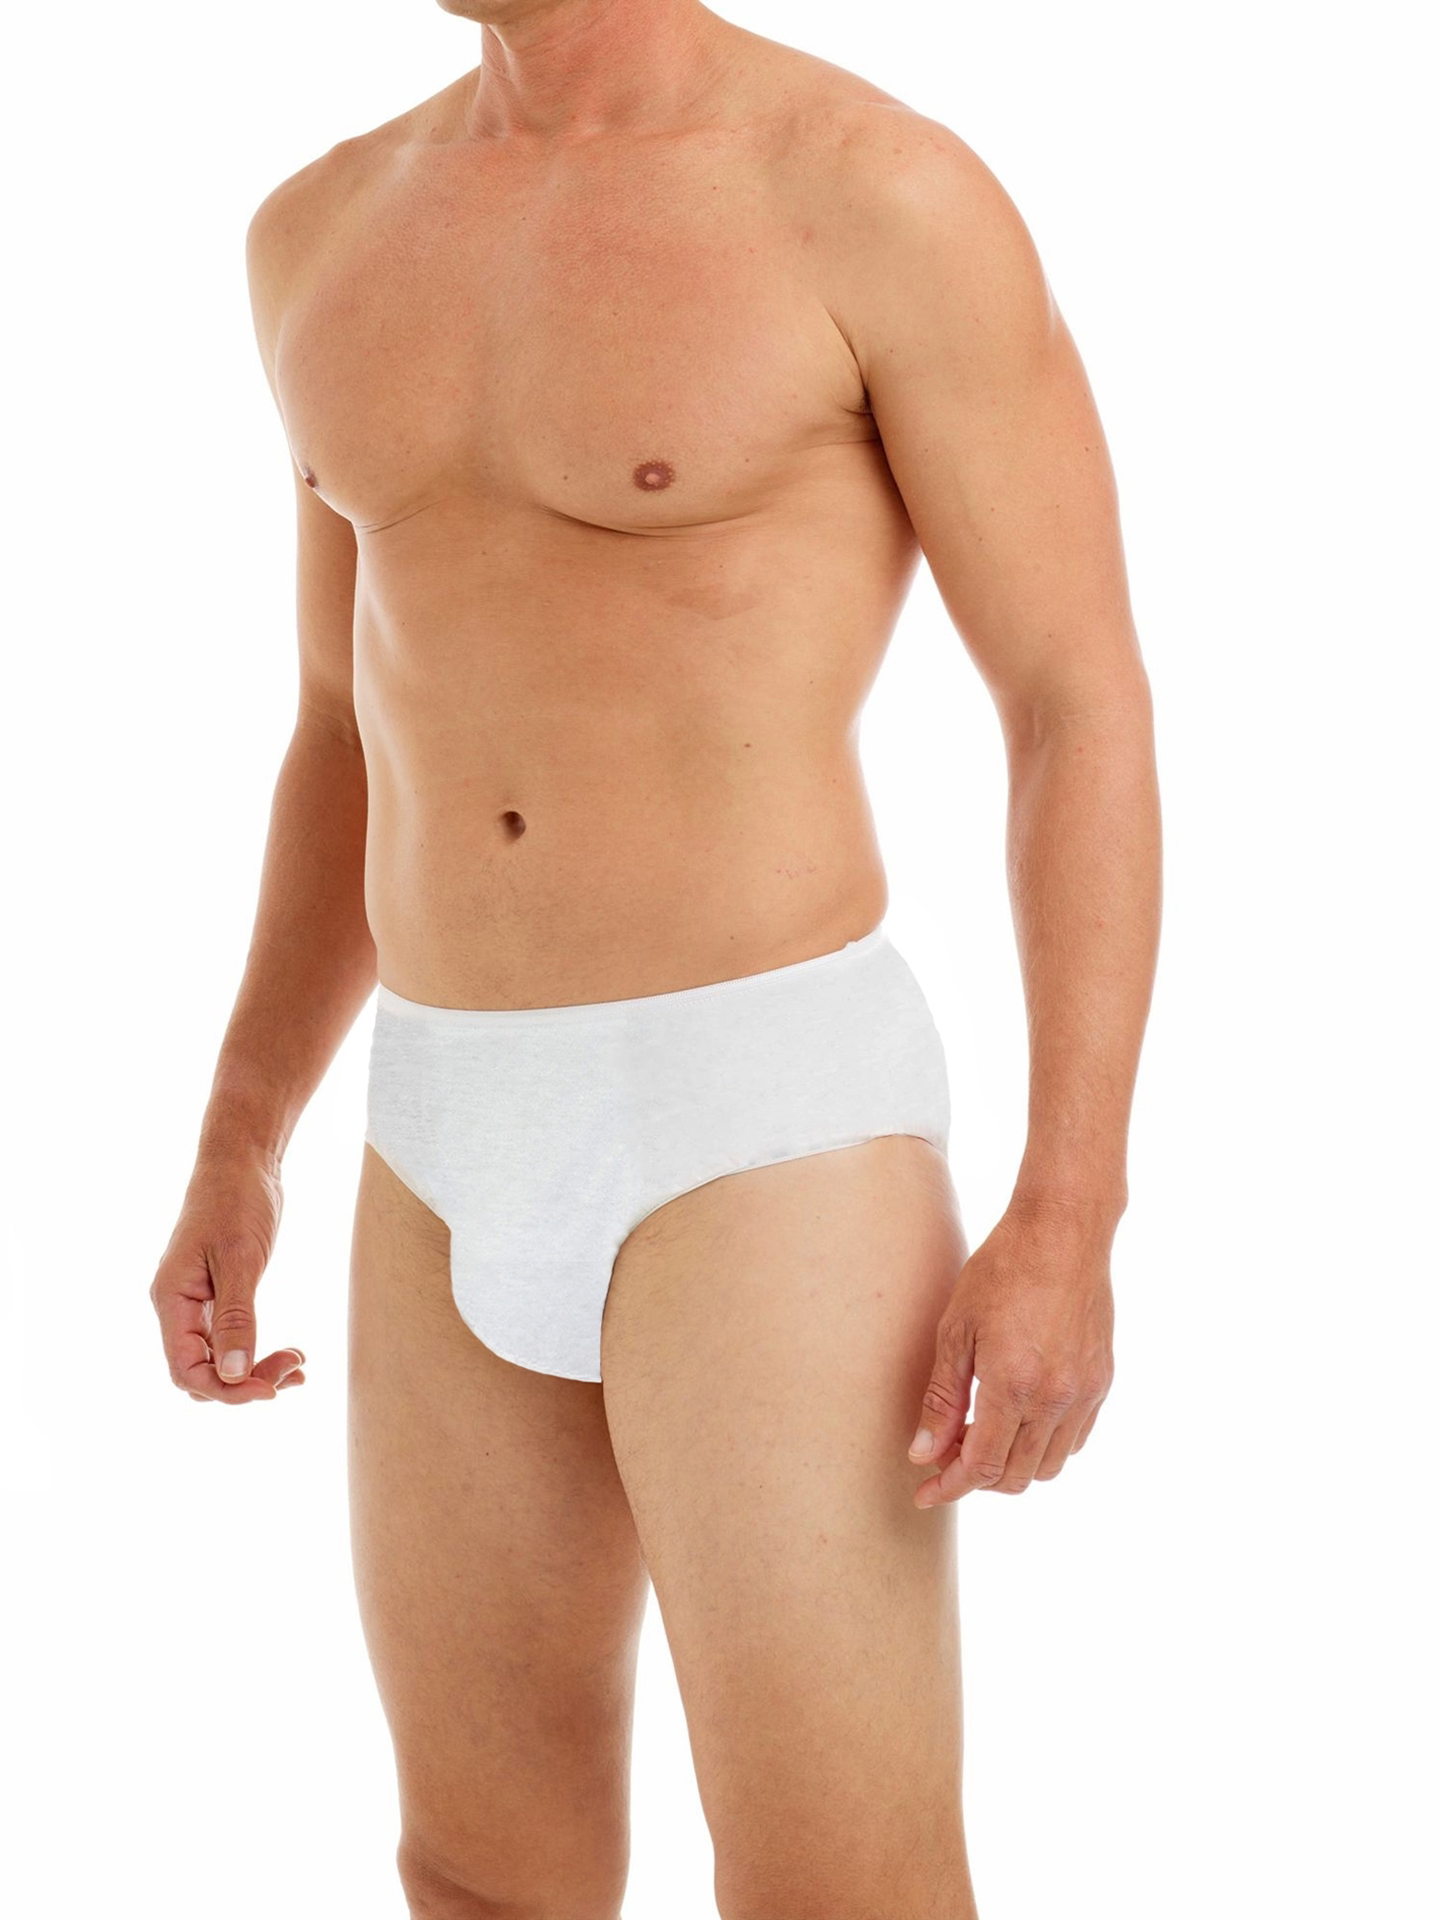 Men's Cotton Disposable Underwear, Great for Travel